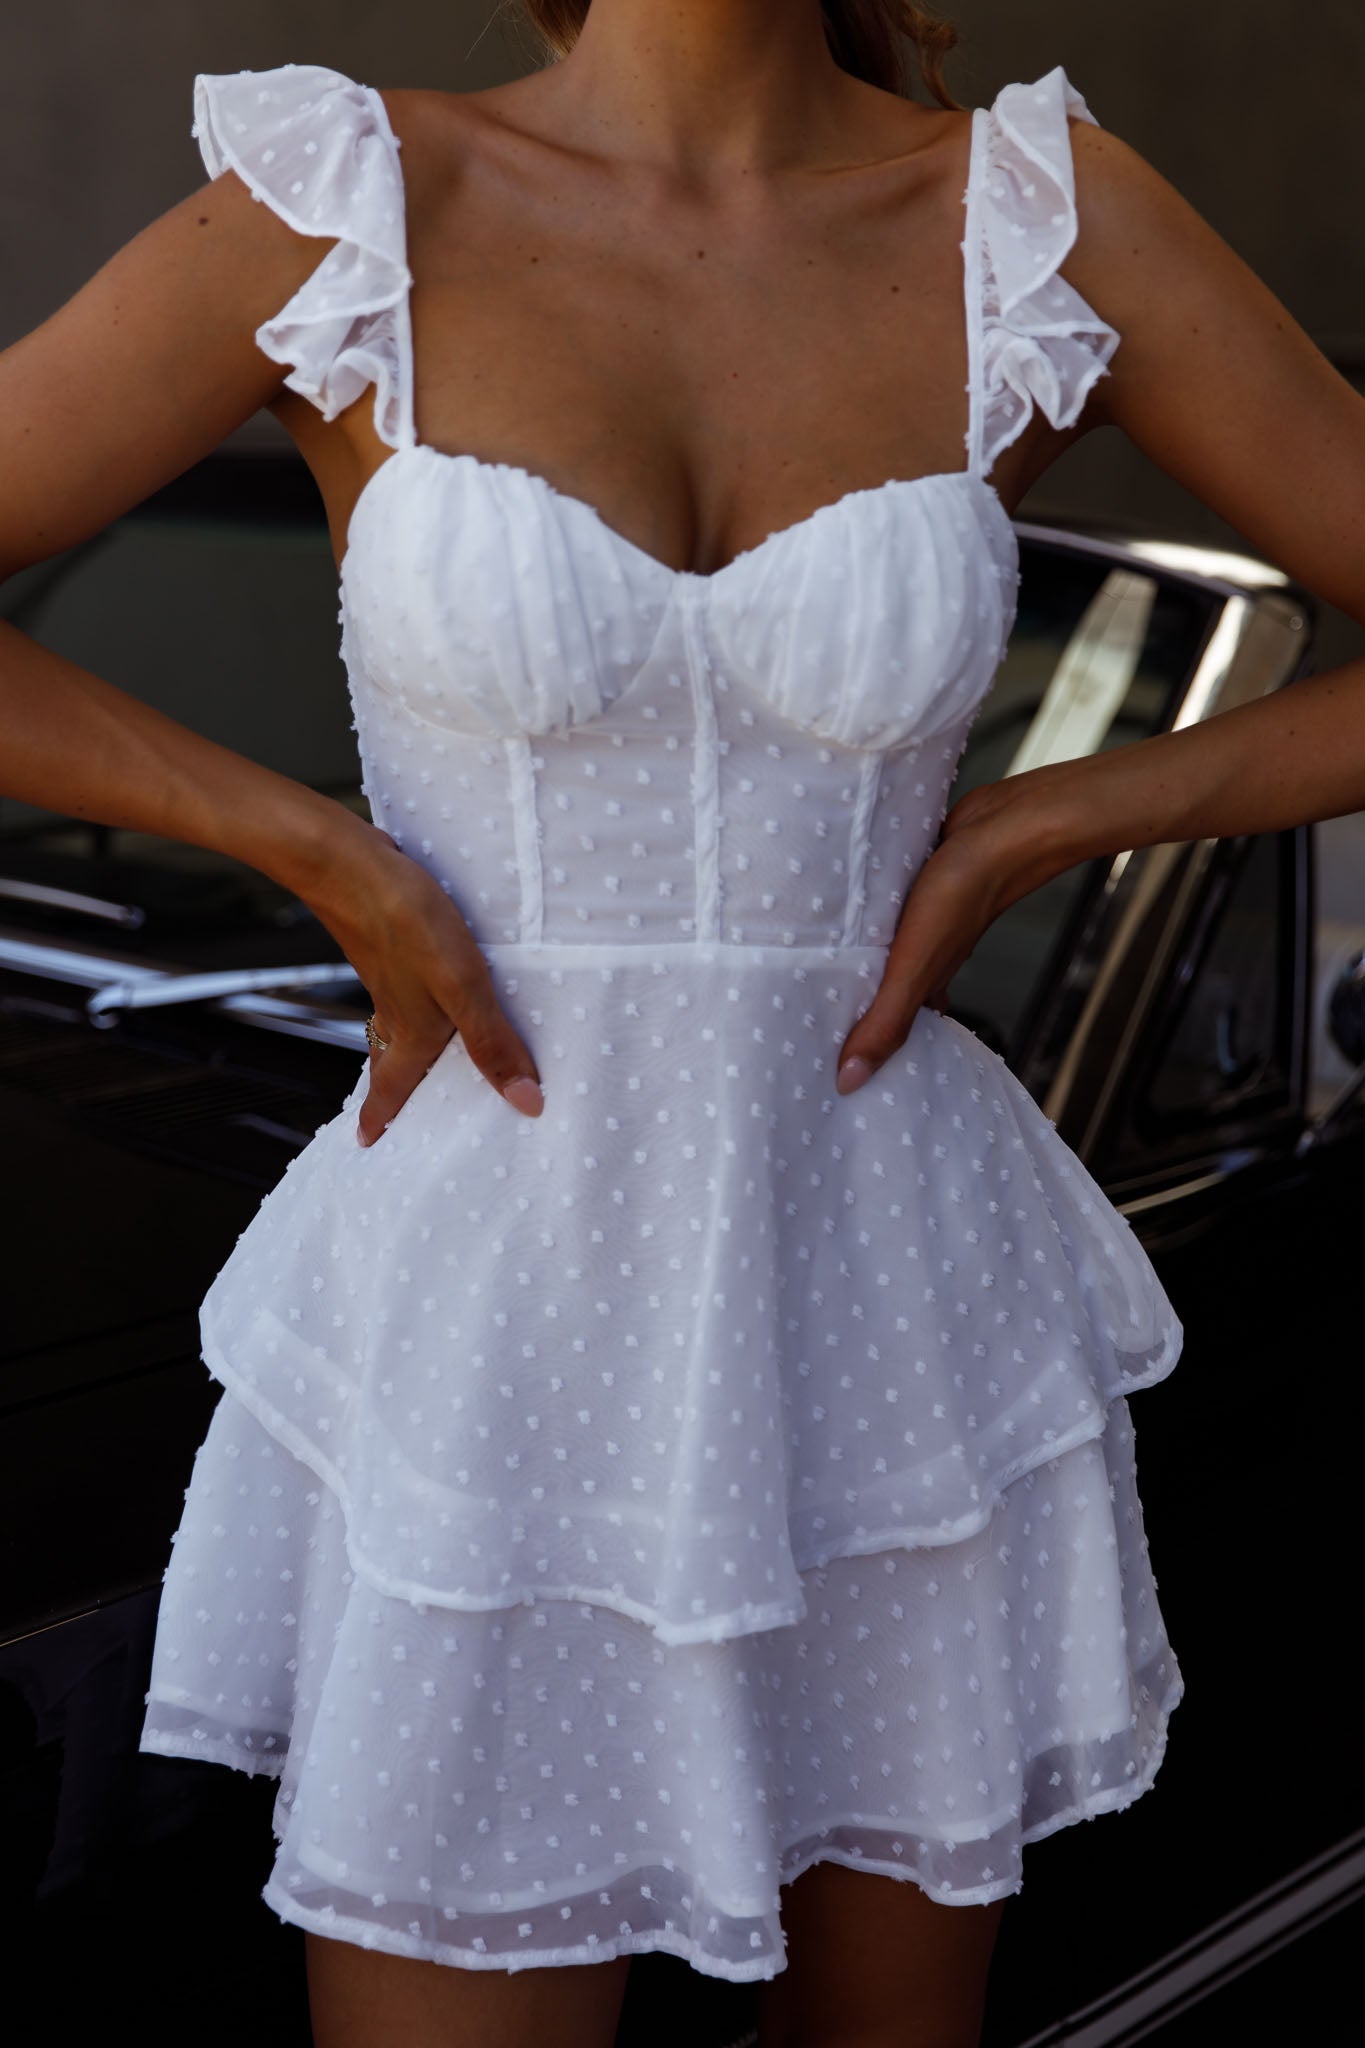 Meli Sweetheart Neckline Cap Sleeve Mini Dress in White